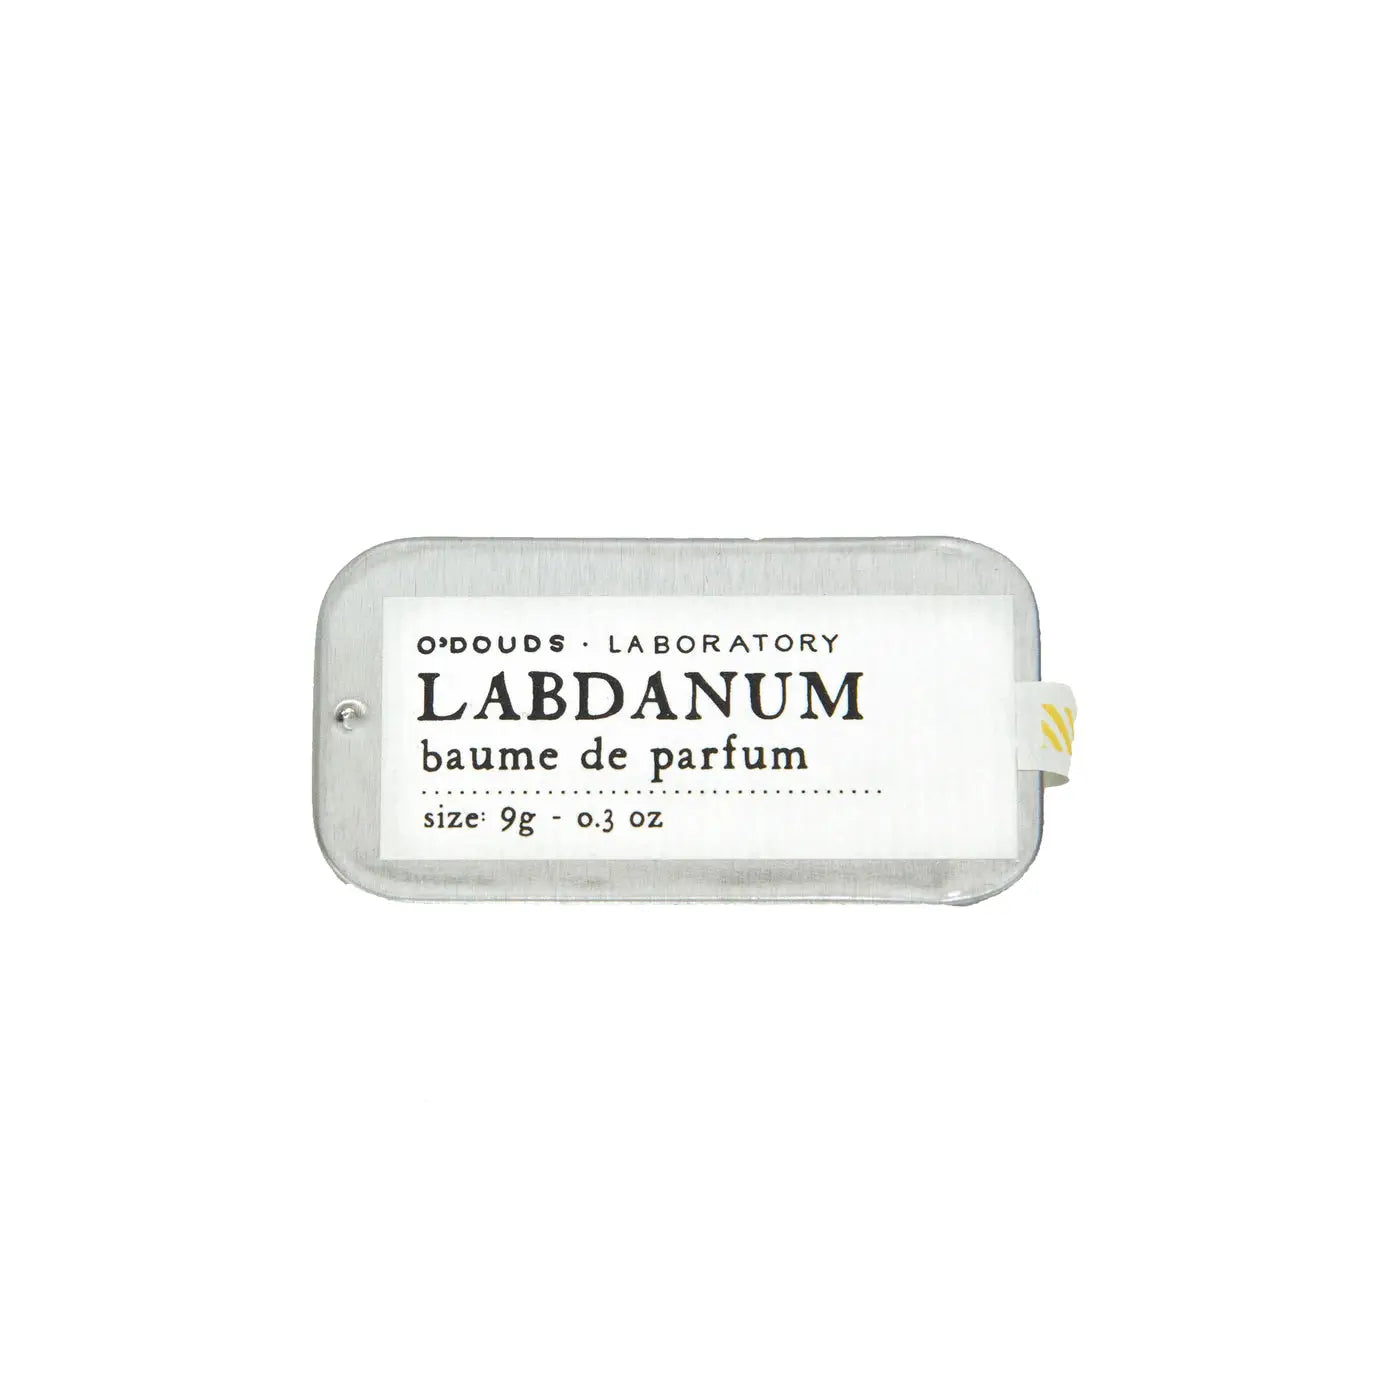 Odouds Labdanum Baume De Parfum